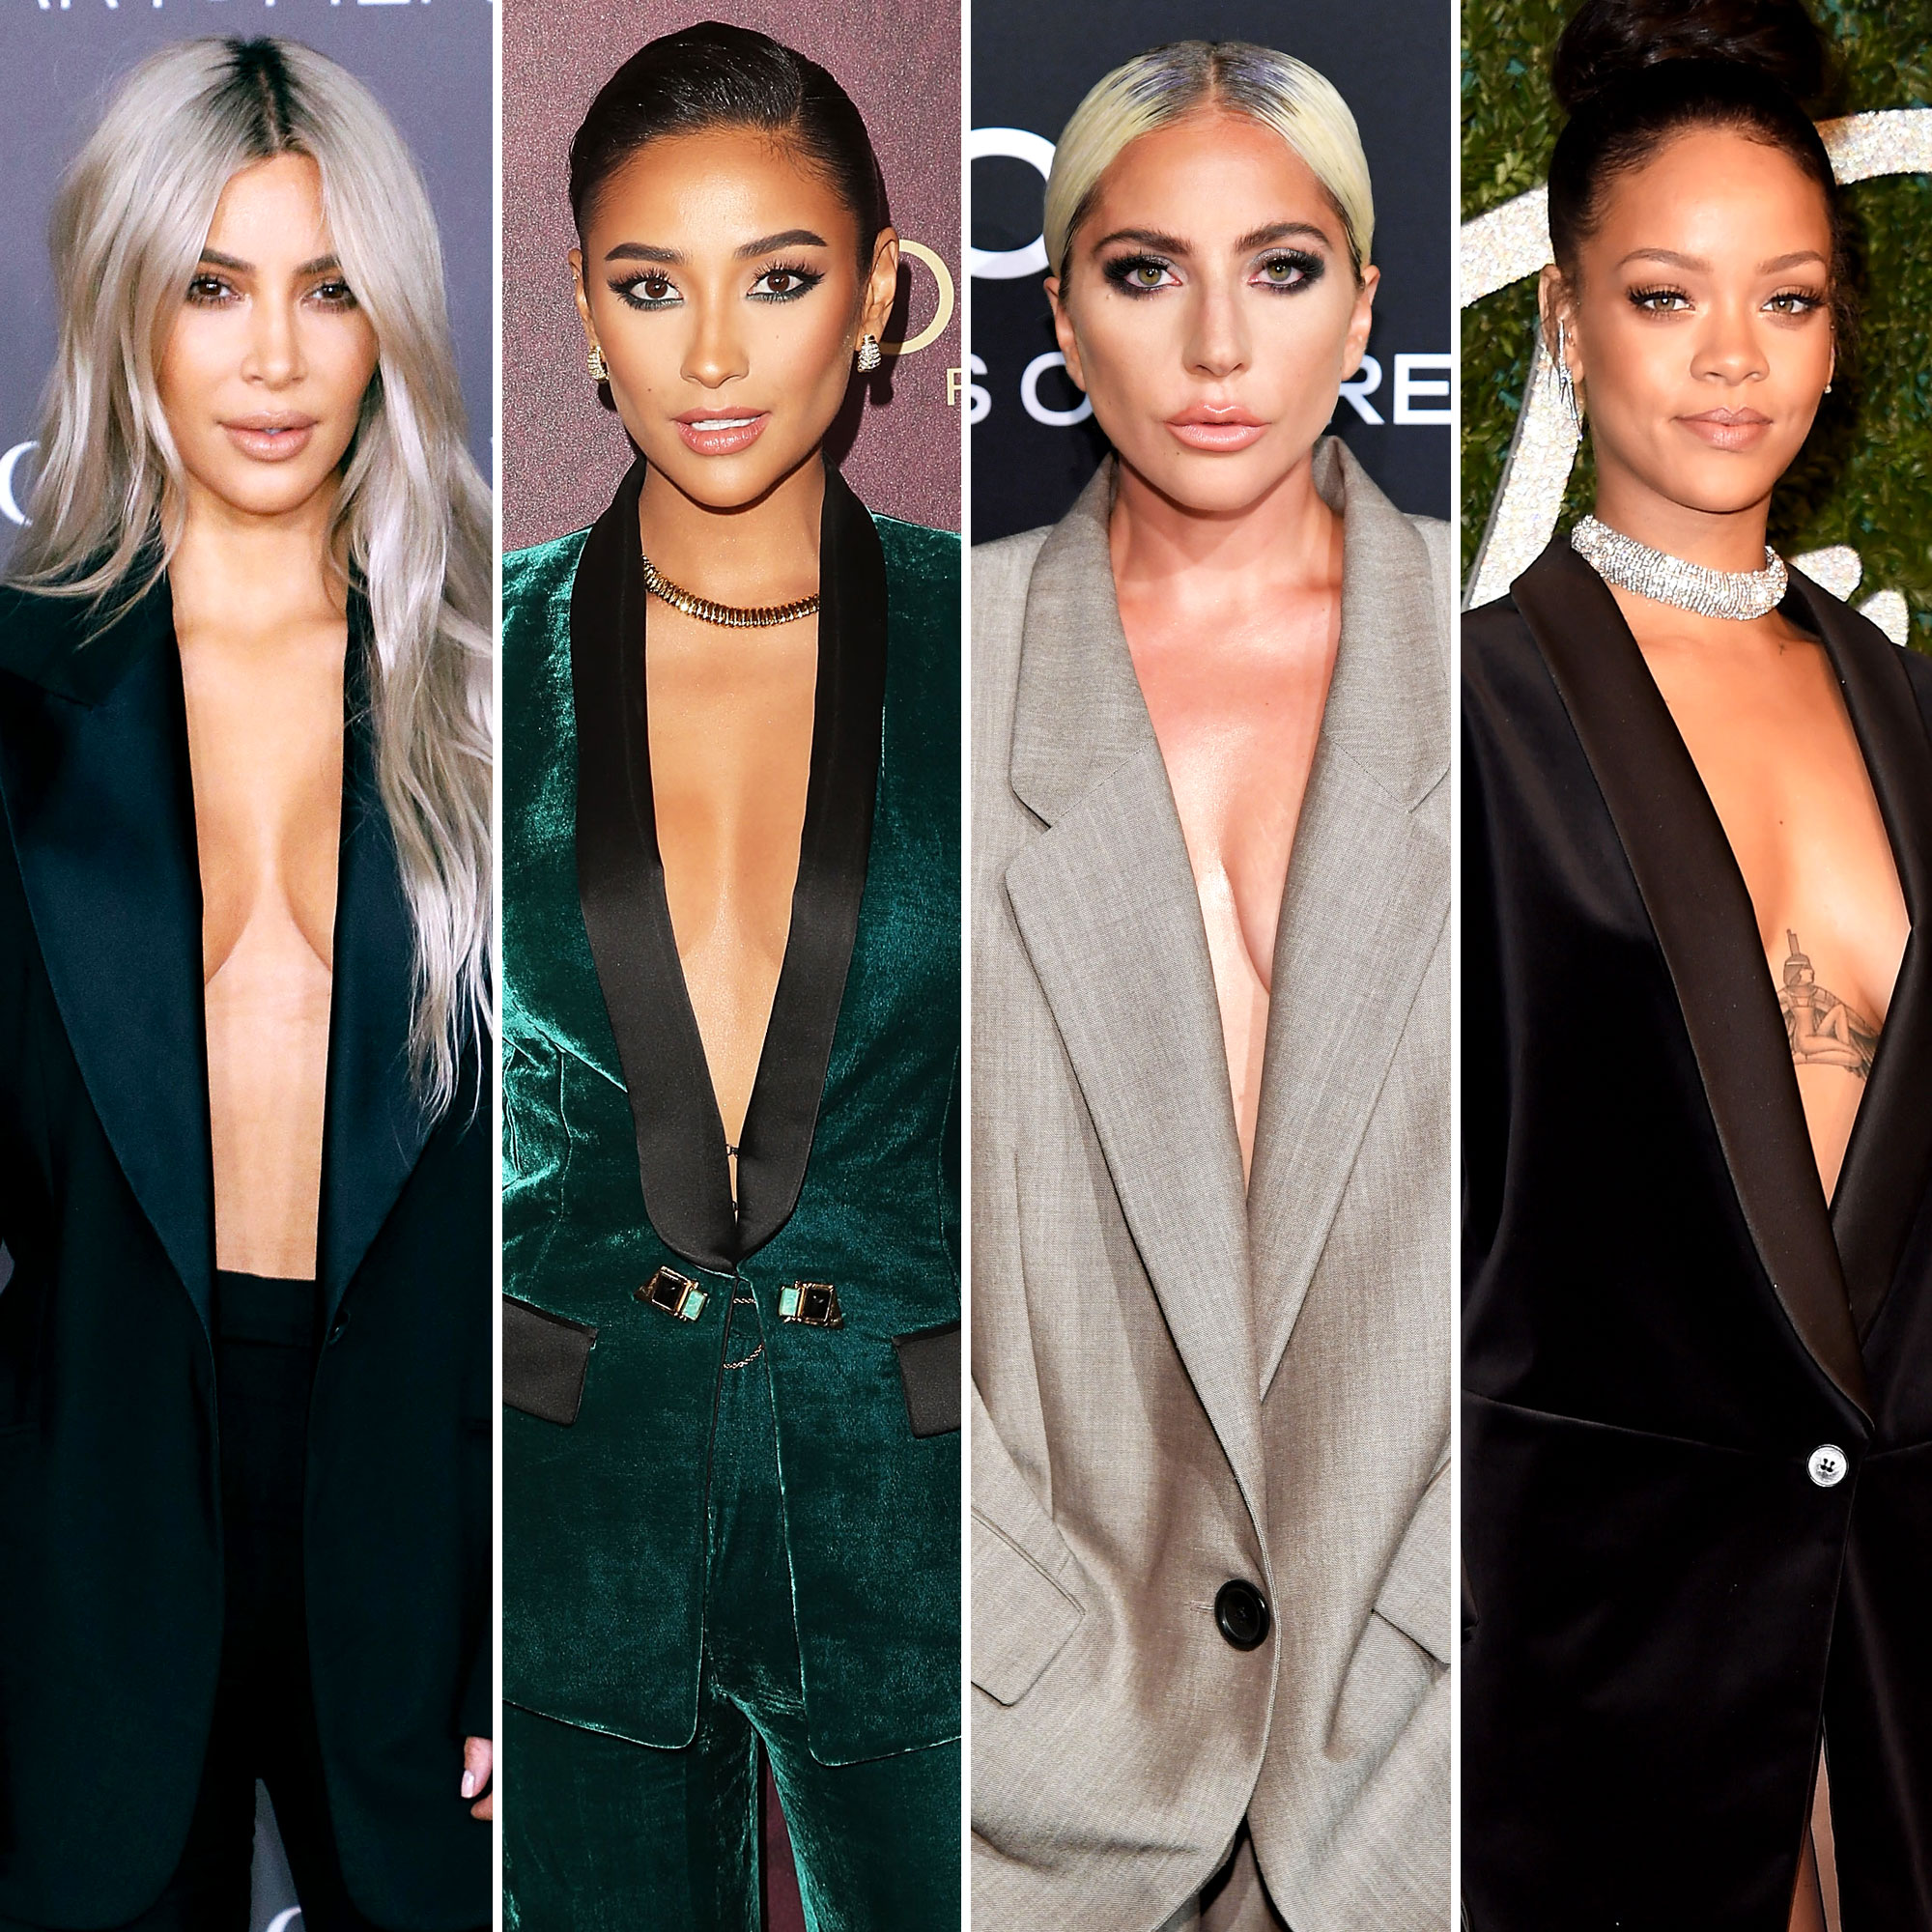 Shirtless Tuxedo Celeb Fashion Trend: Kim Kardashian, More